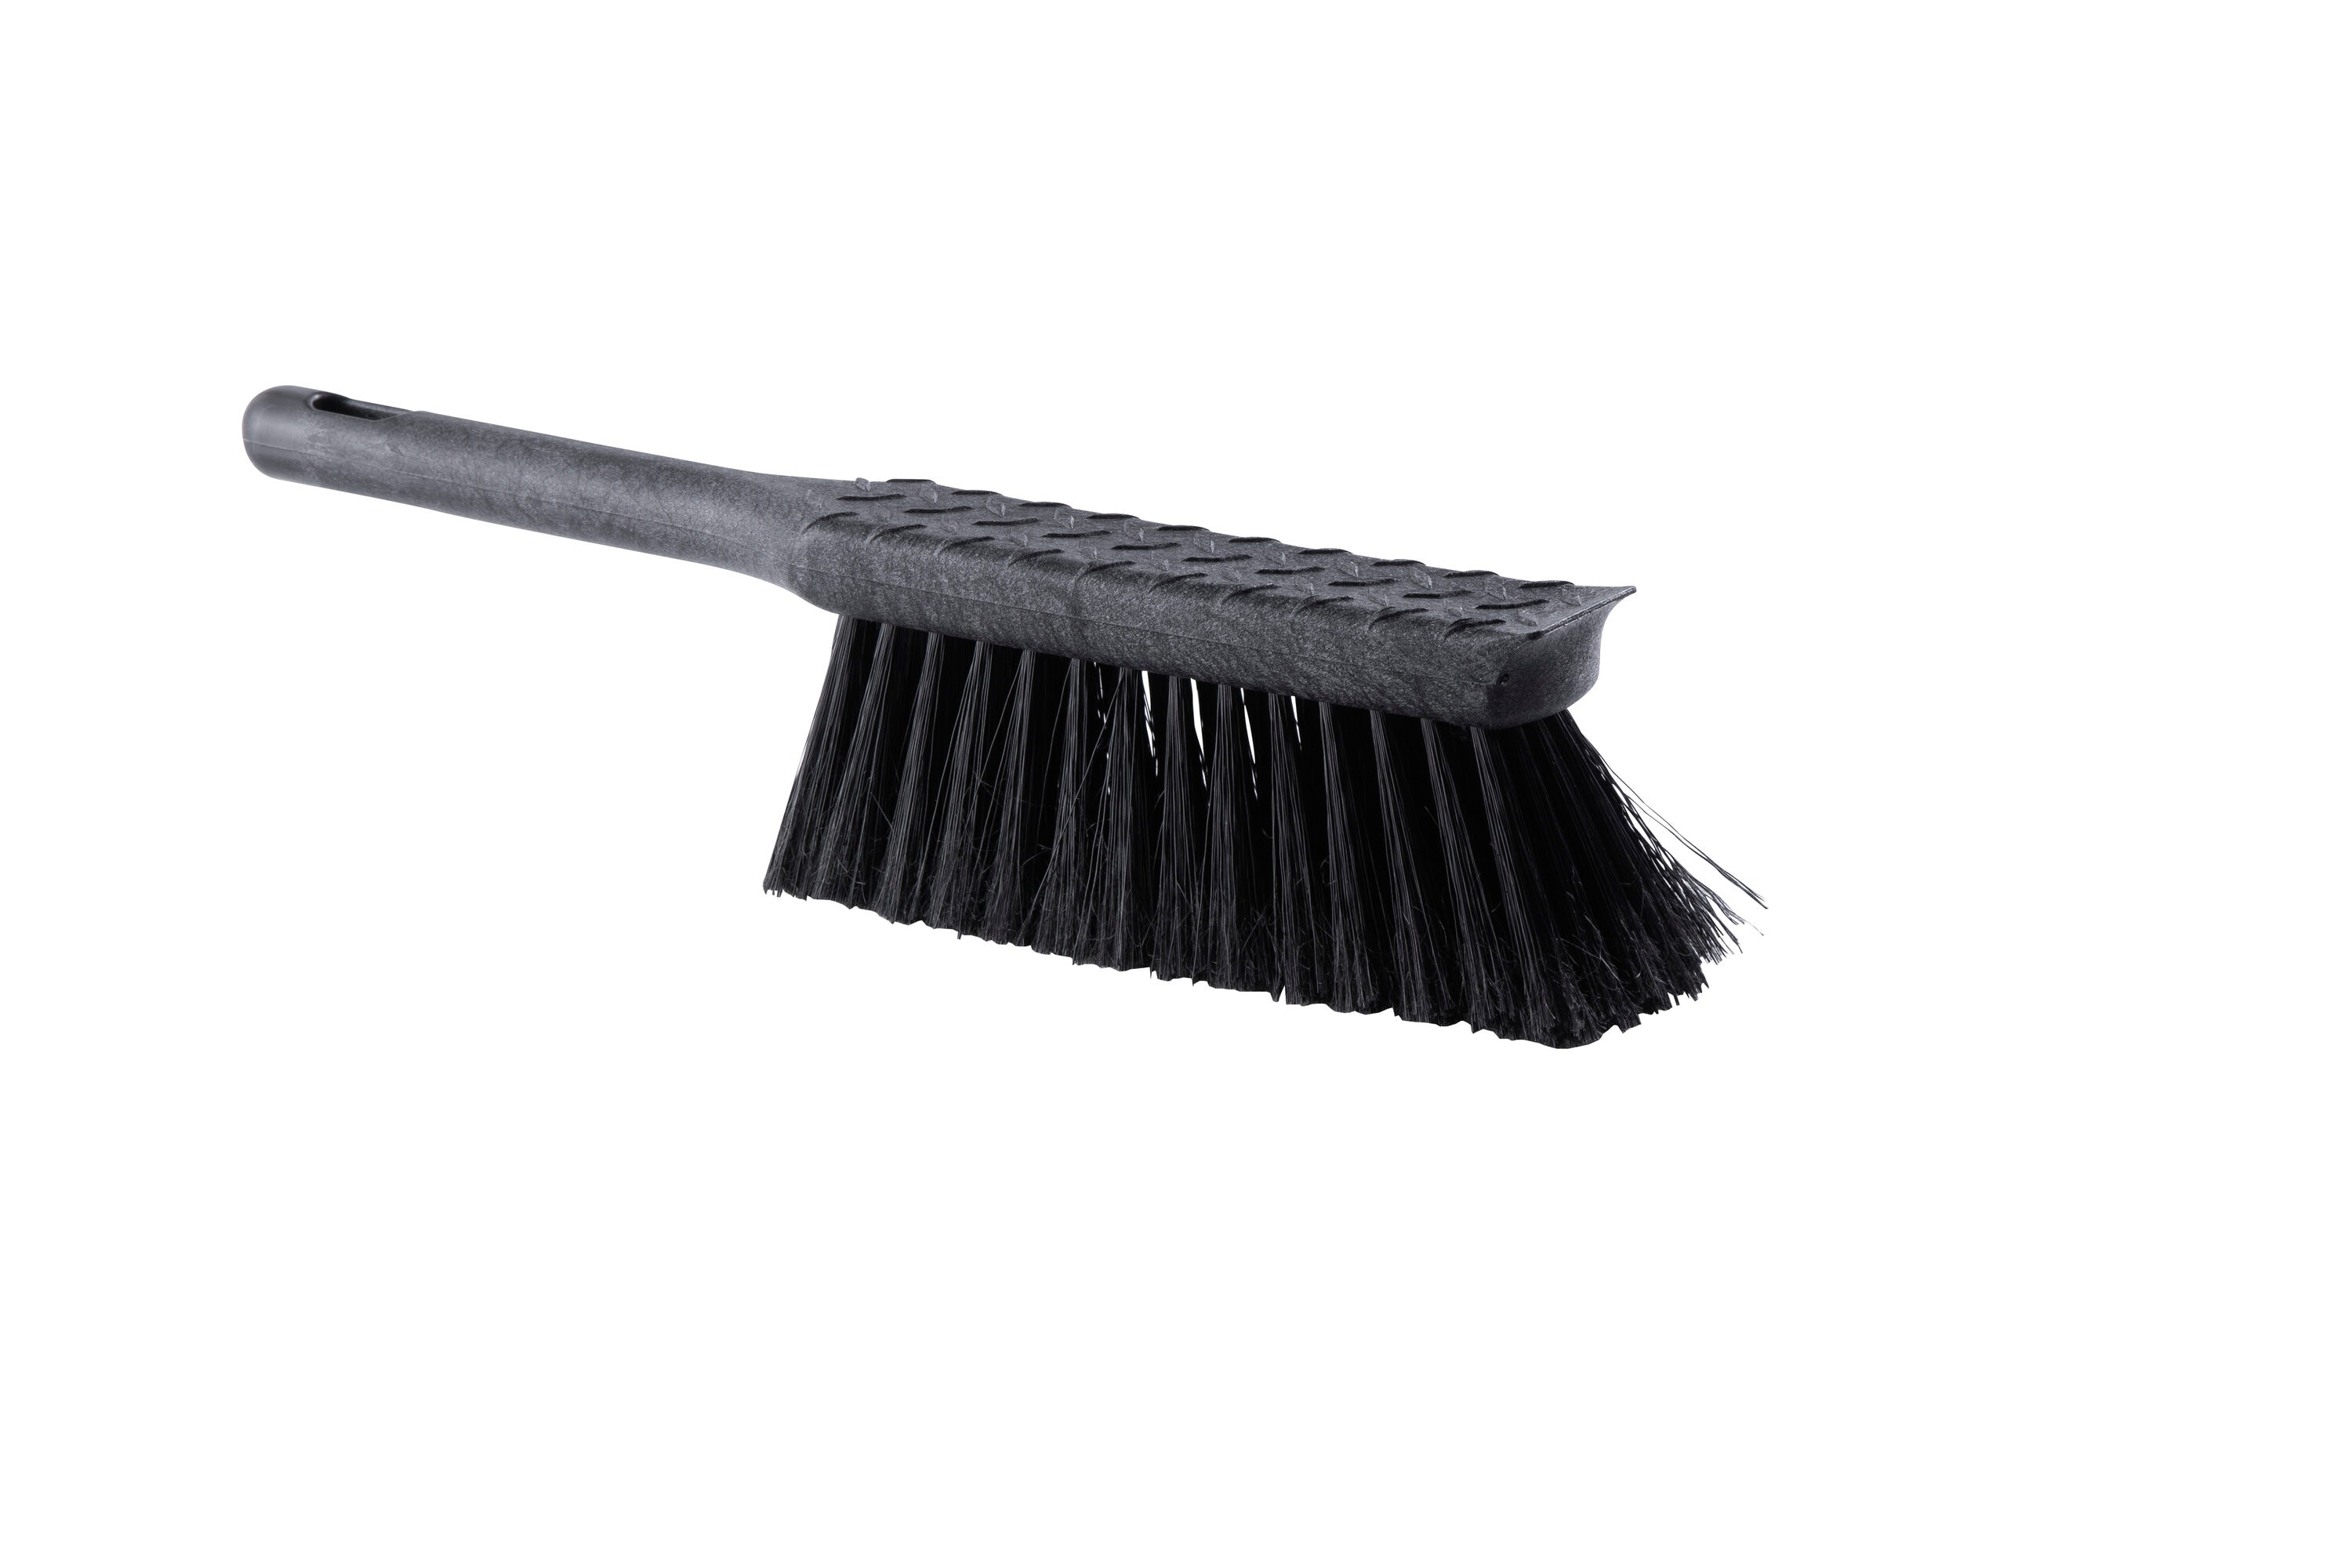 12 Bench Brush, Stiff Bristles - Saldesia Corporation